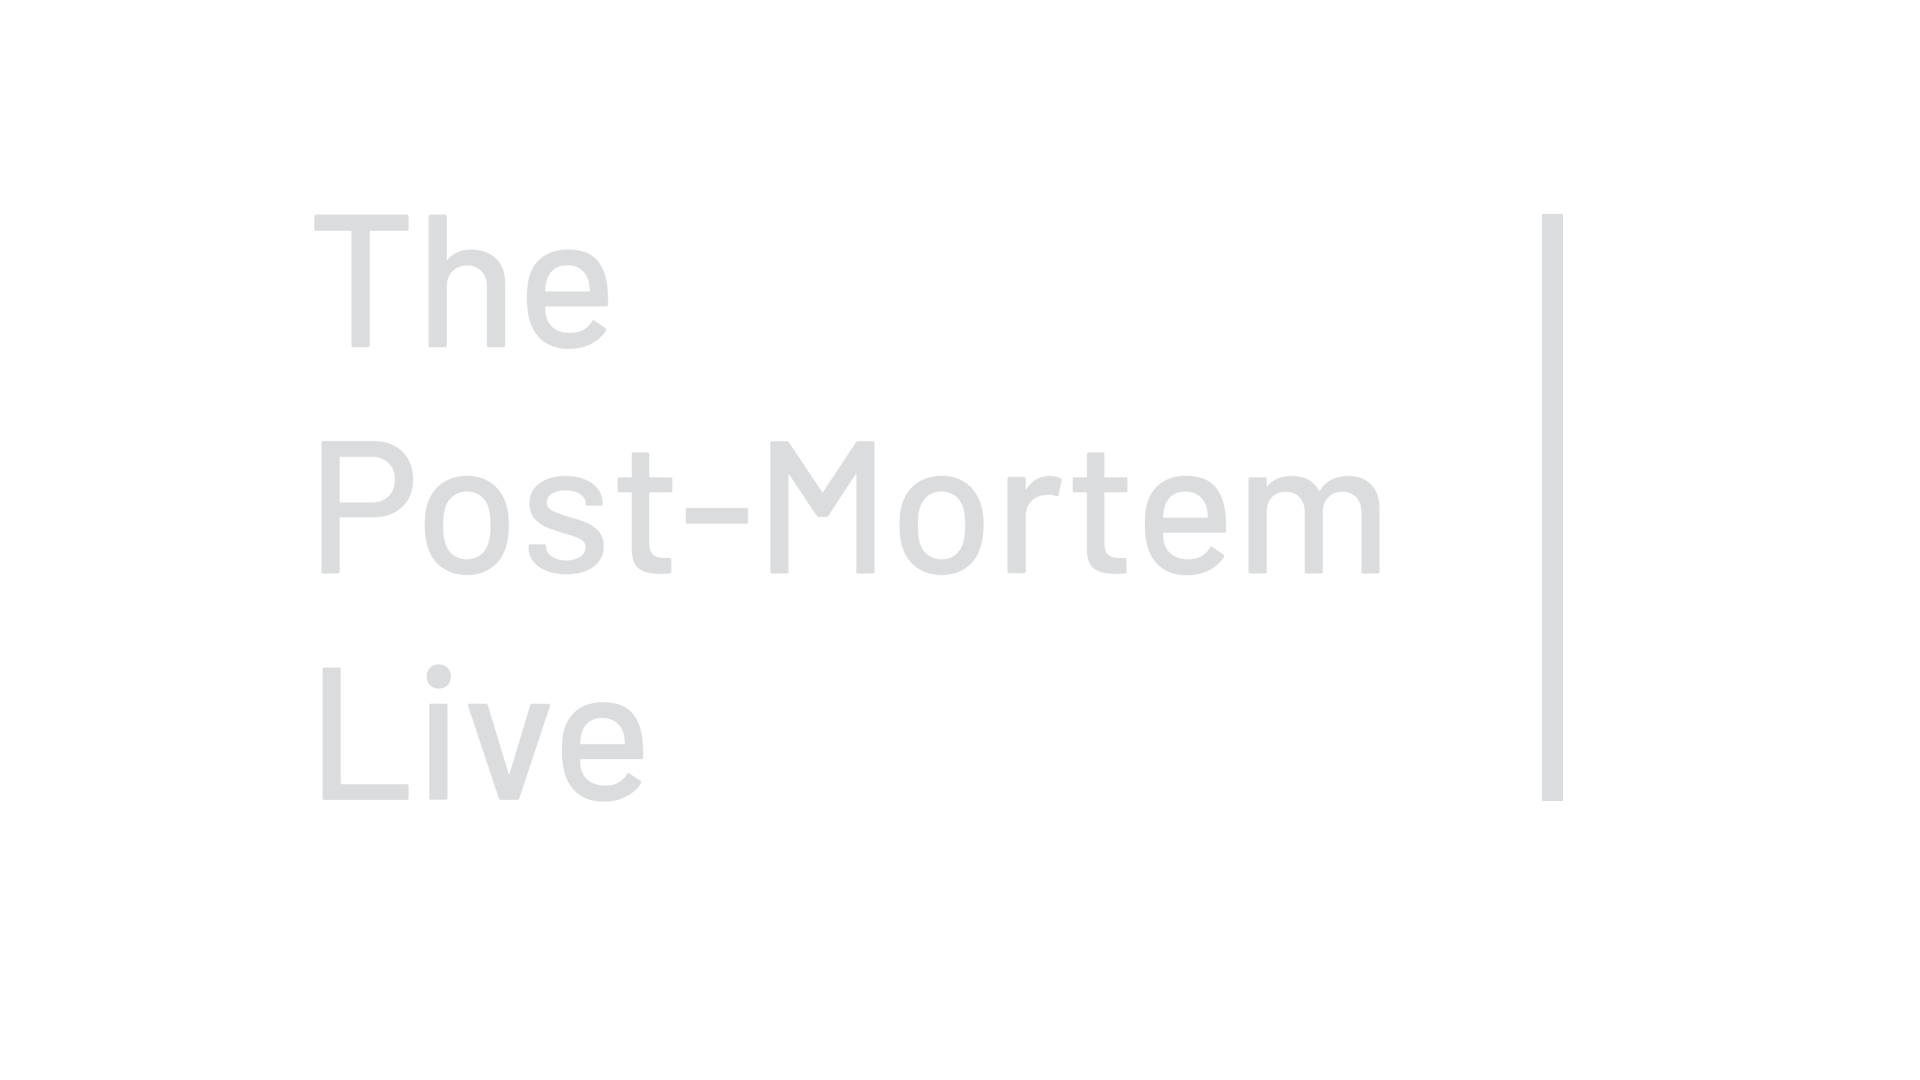 The Post Mortem Live